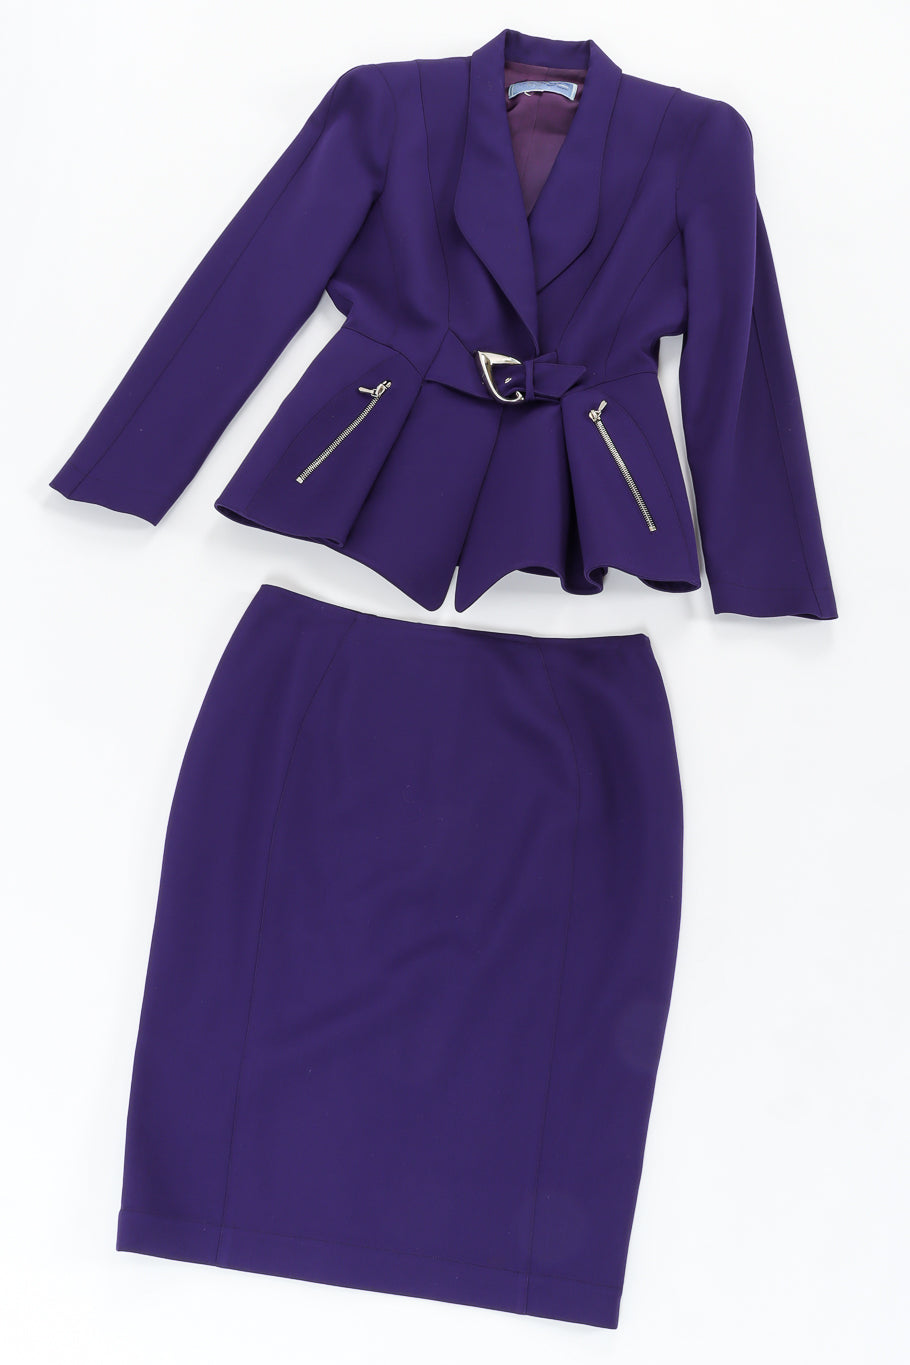 Vintage Thierry Mugler Buckle Jacket & Skirt Suit Set full set flat lay @ Recess LA